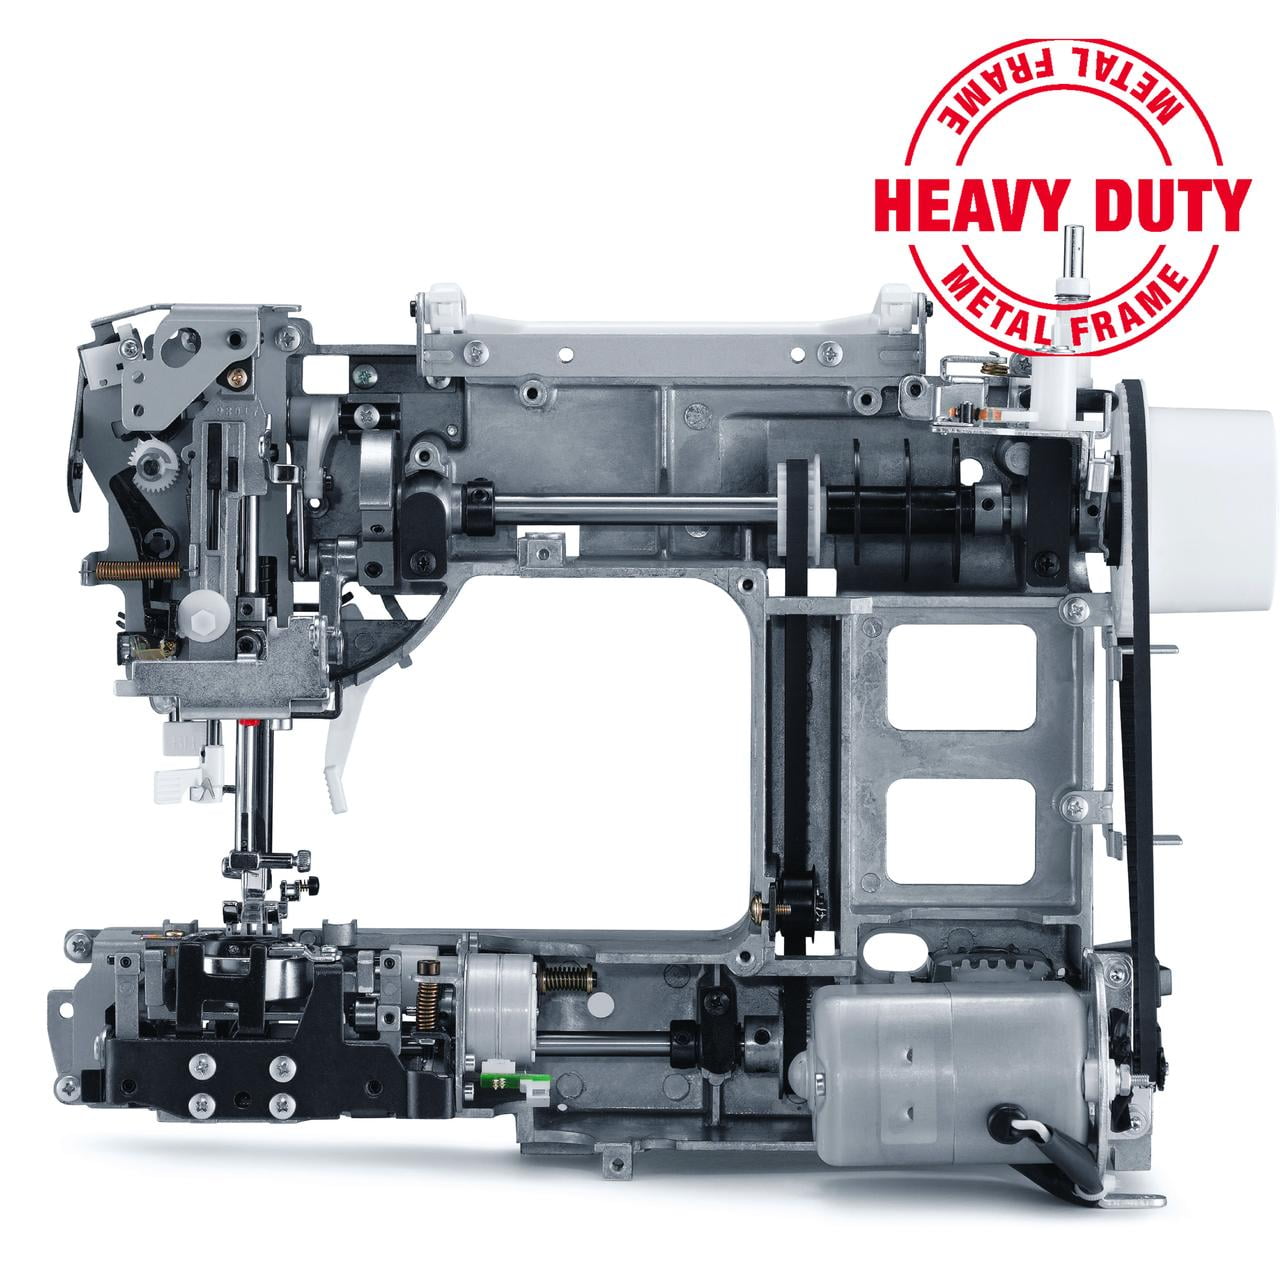 Singer 4432 - Heavy Duty Sewing Machine